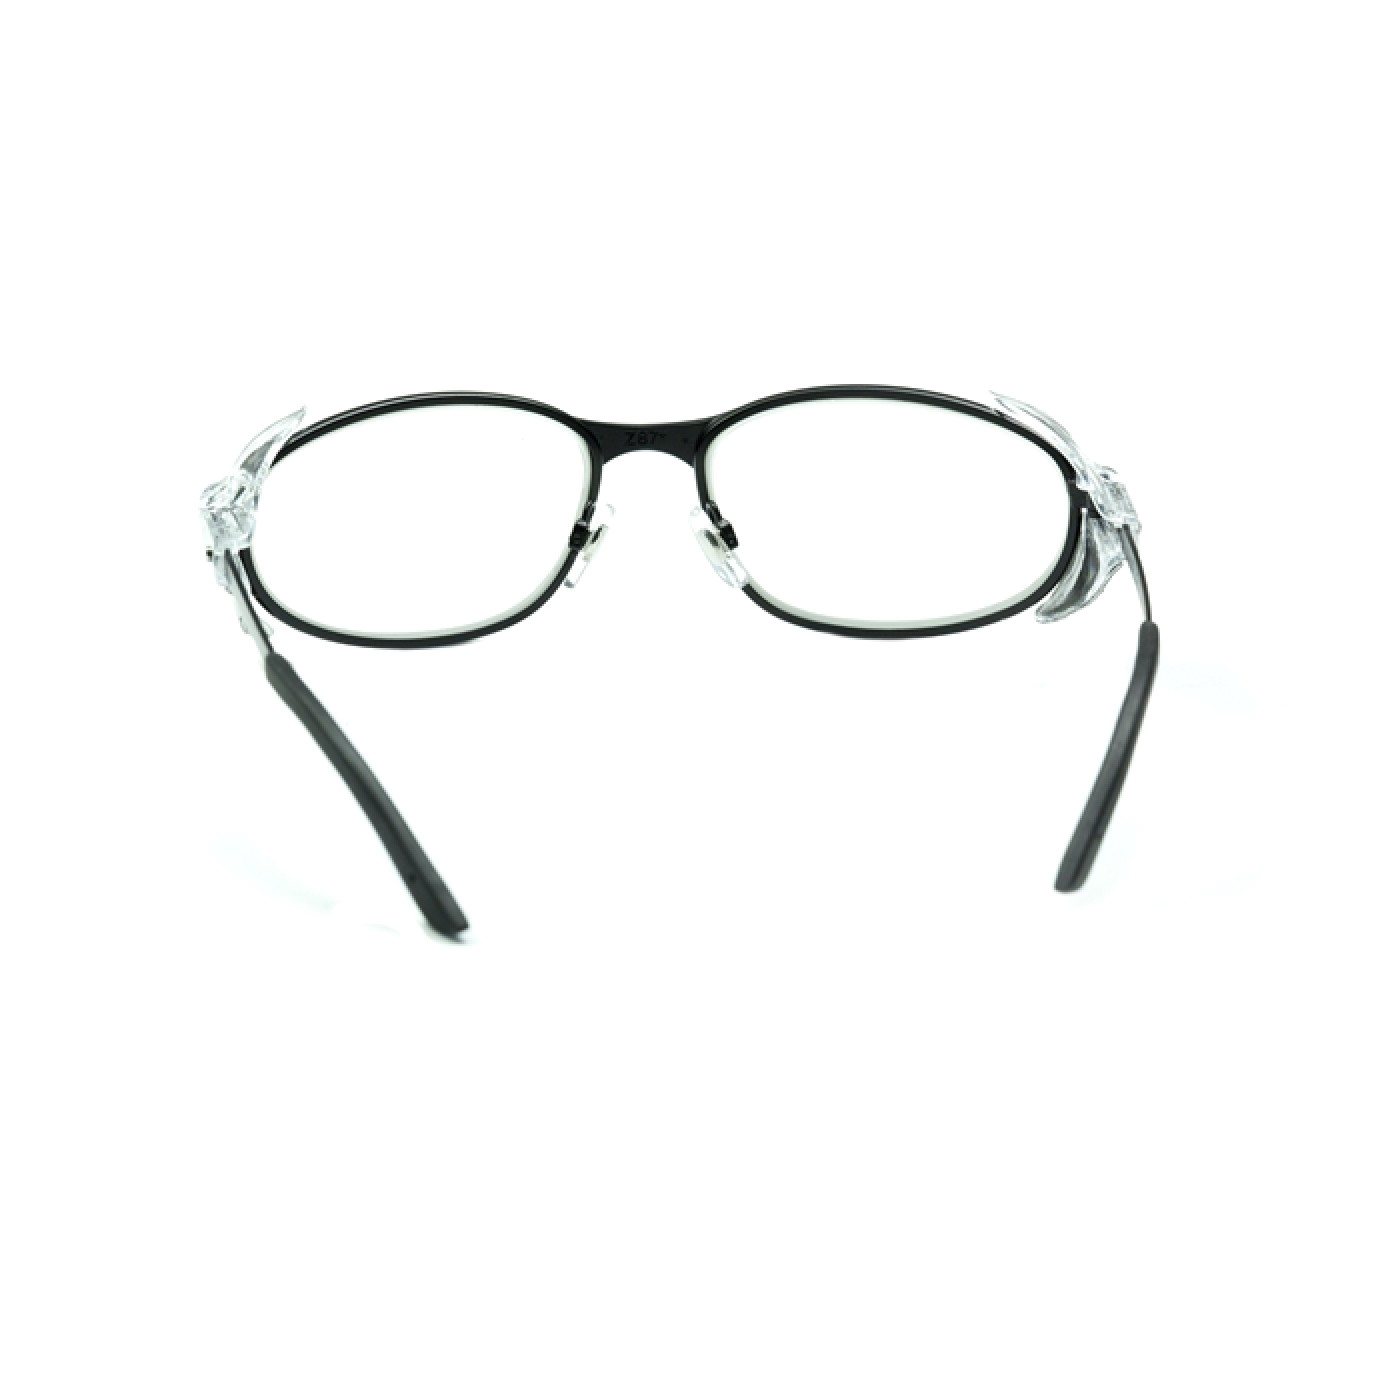 more views metal radiation glasses with slim side shields